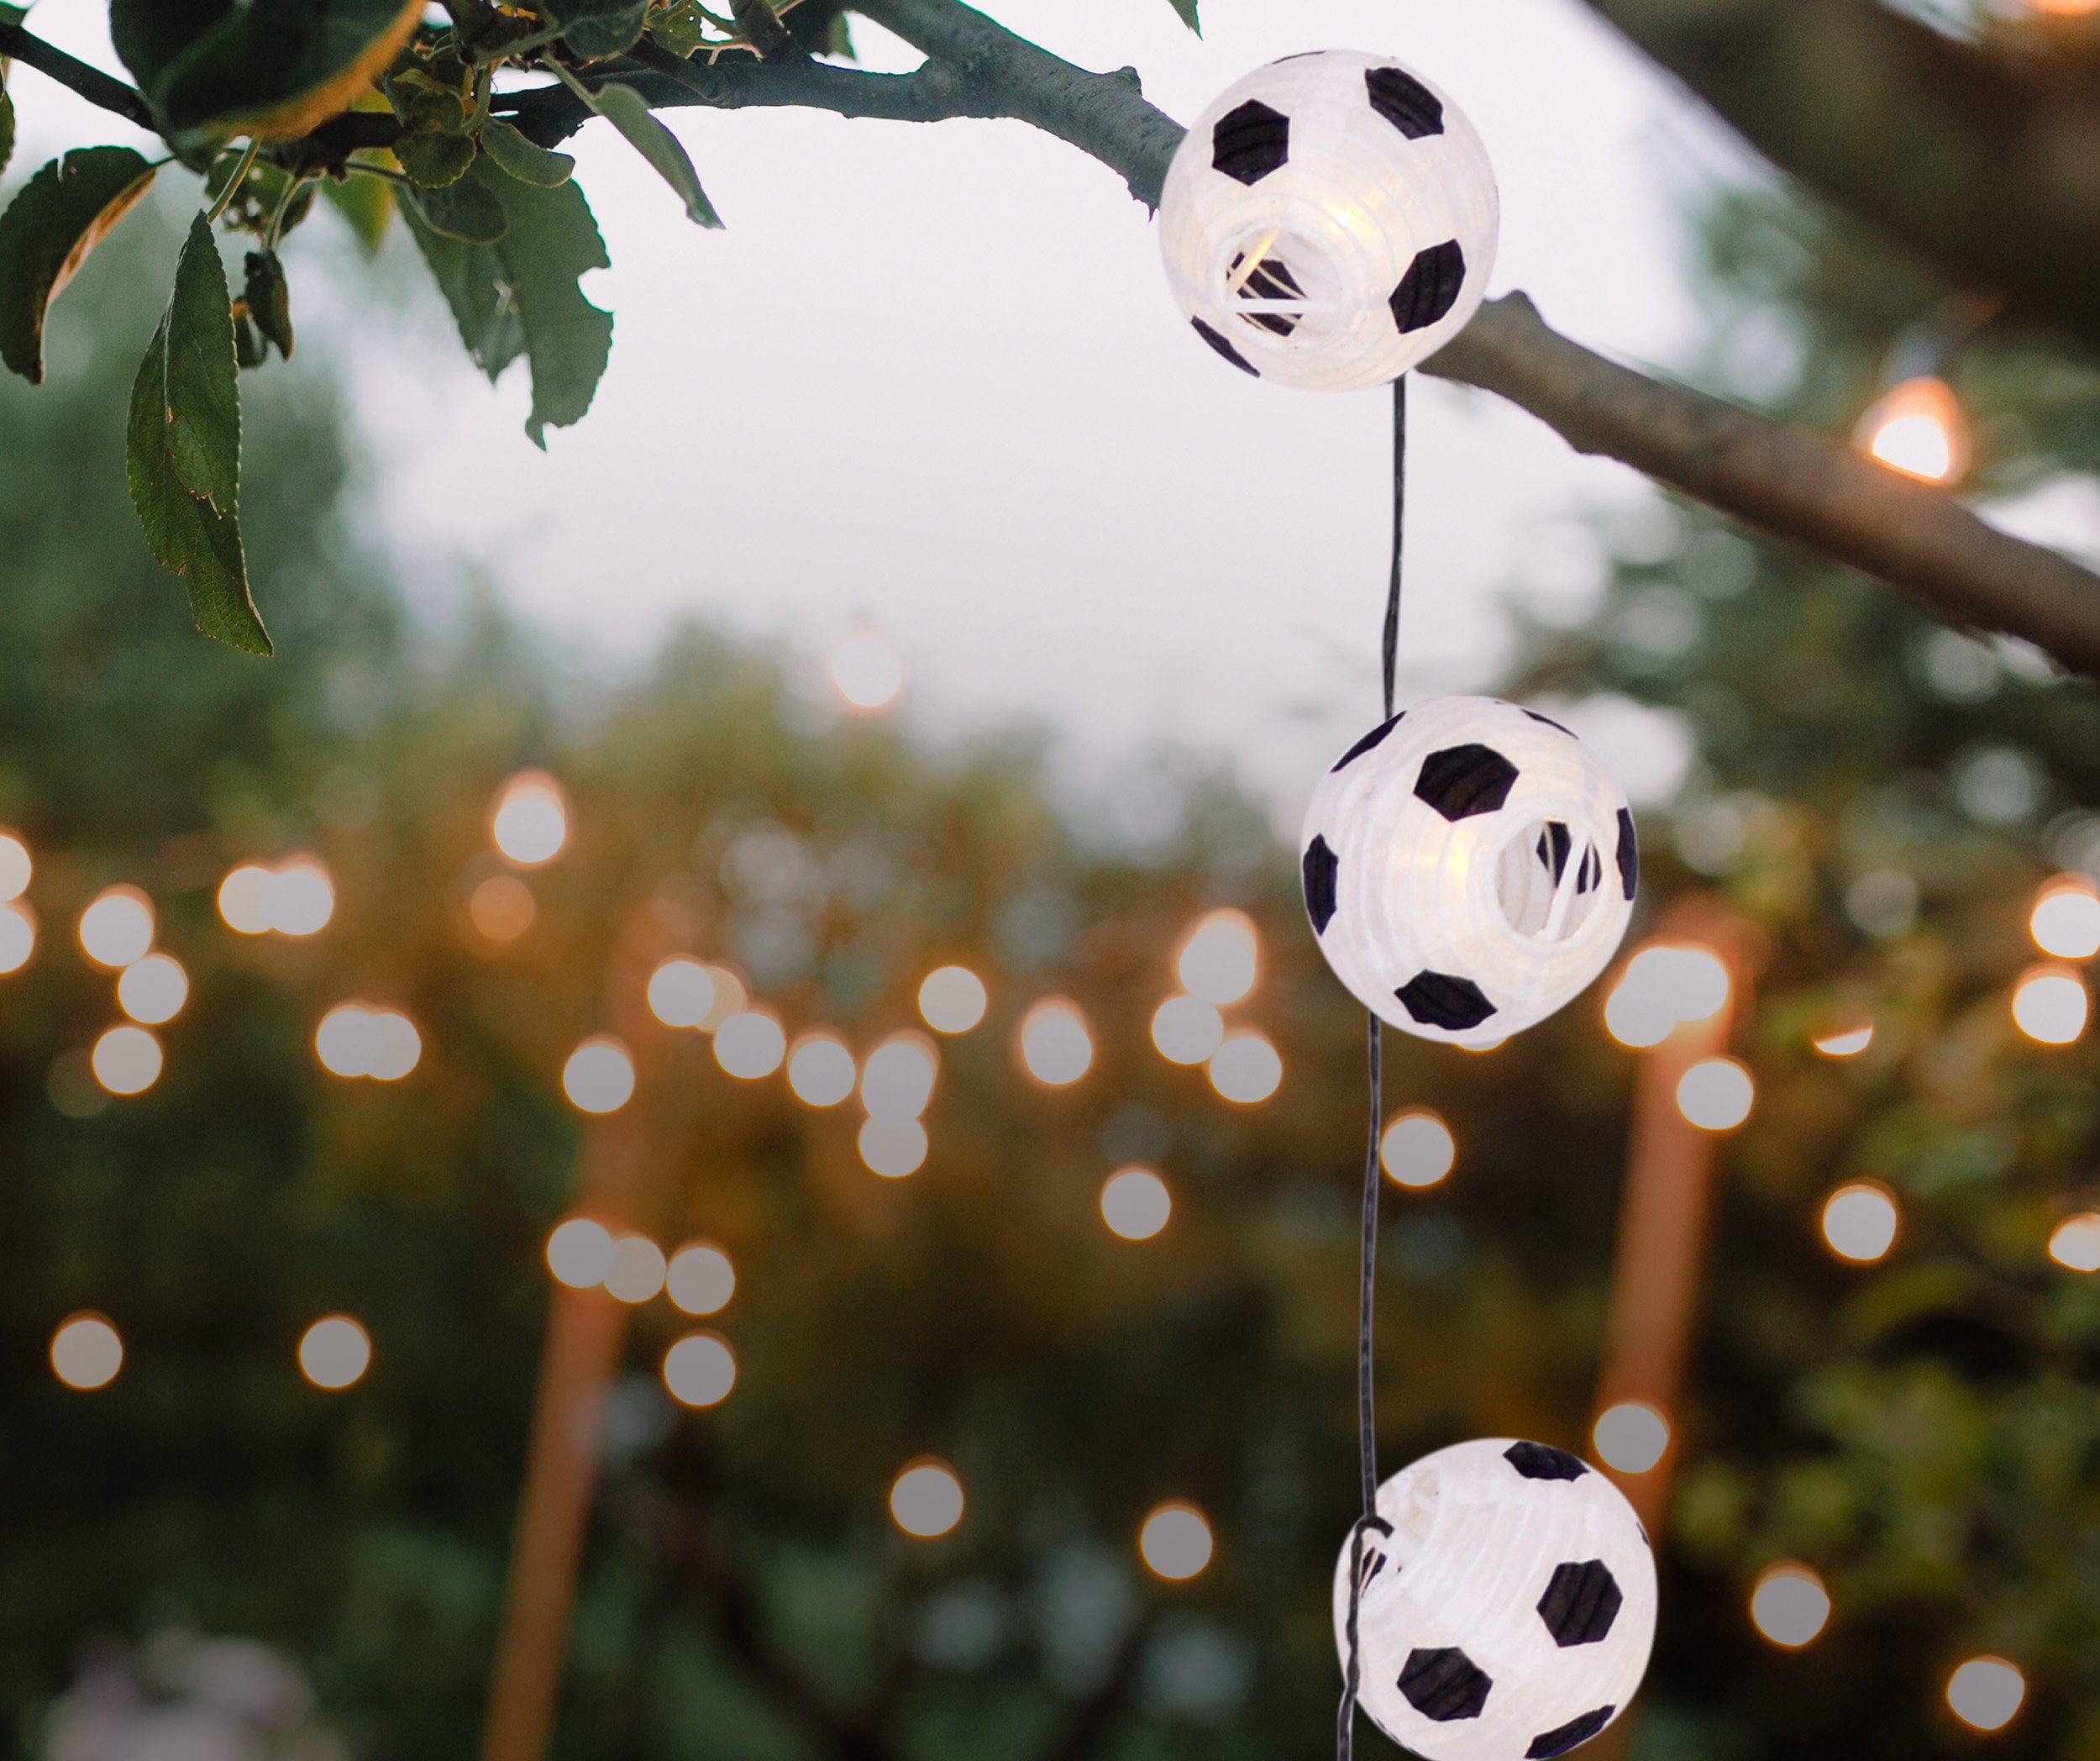 Fußball, Material: Polyester, Lichterkette Metall, Kunststoff, Japanballon-20er-Solar-Lichterkette, Farbe: weiß/schwarz näve